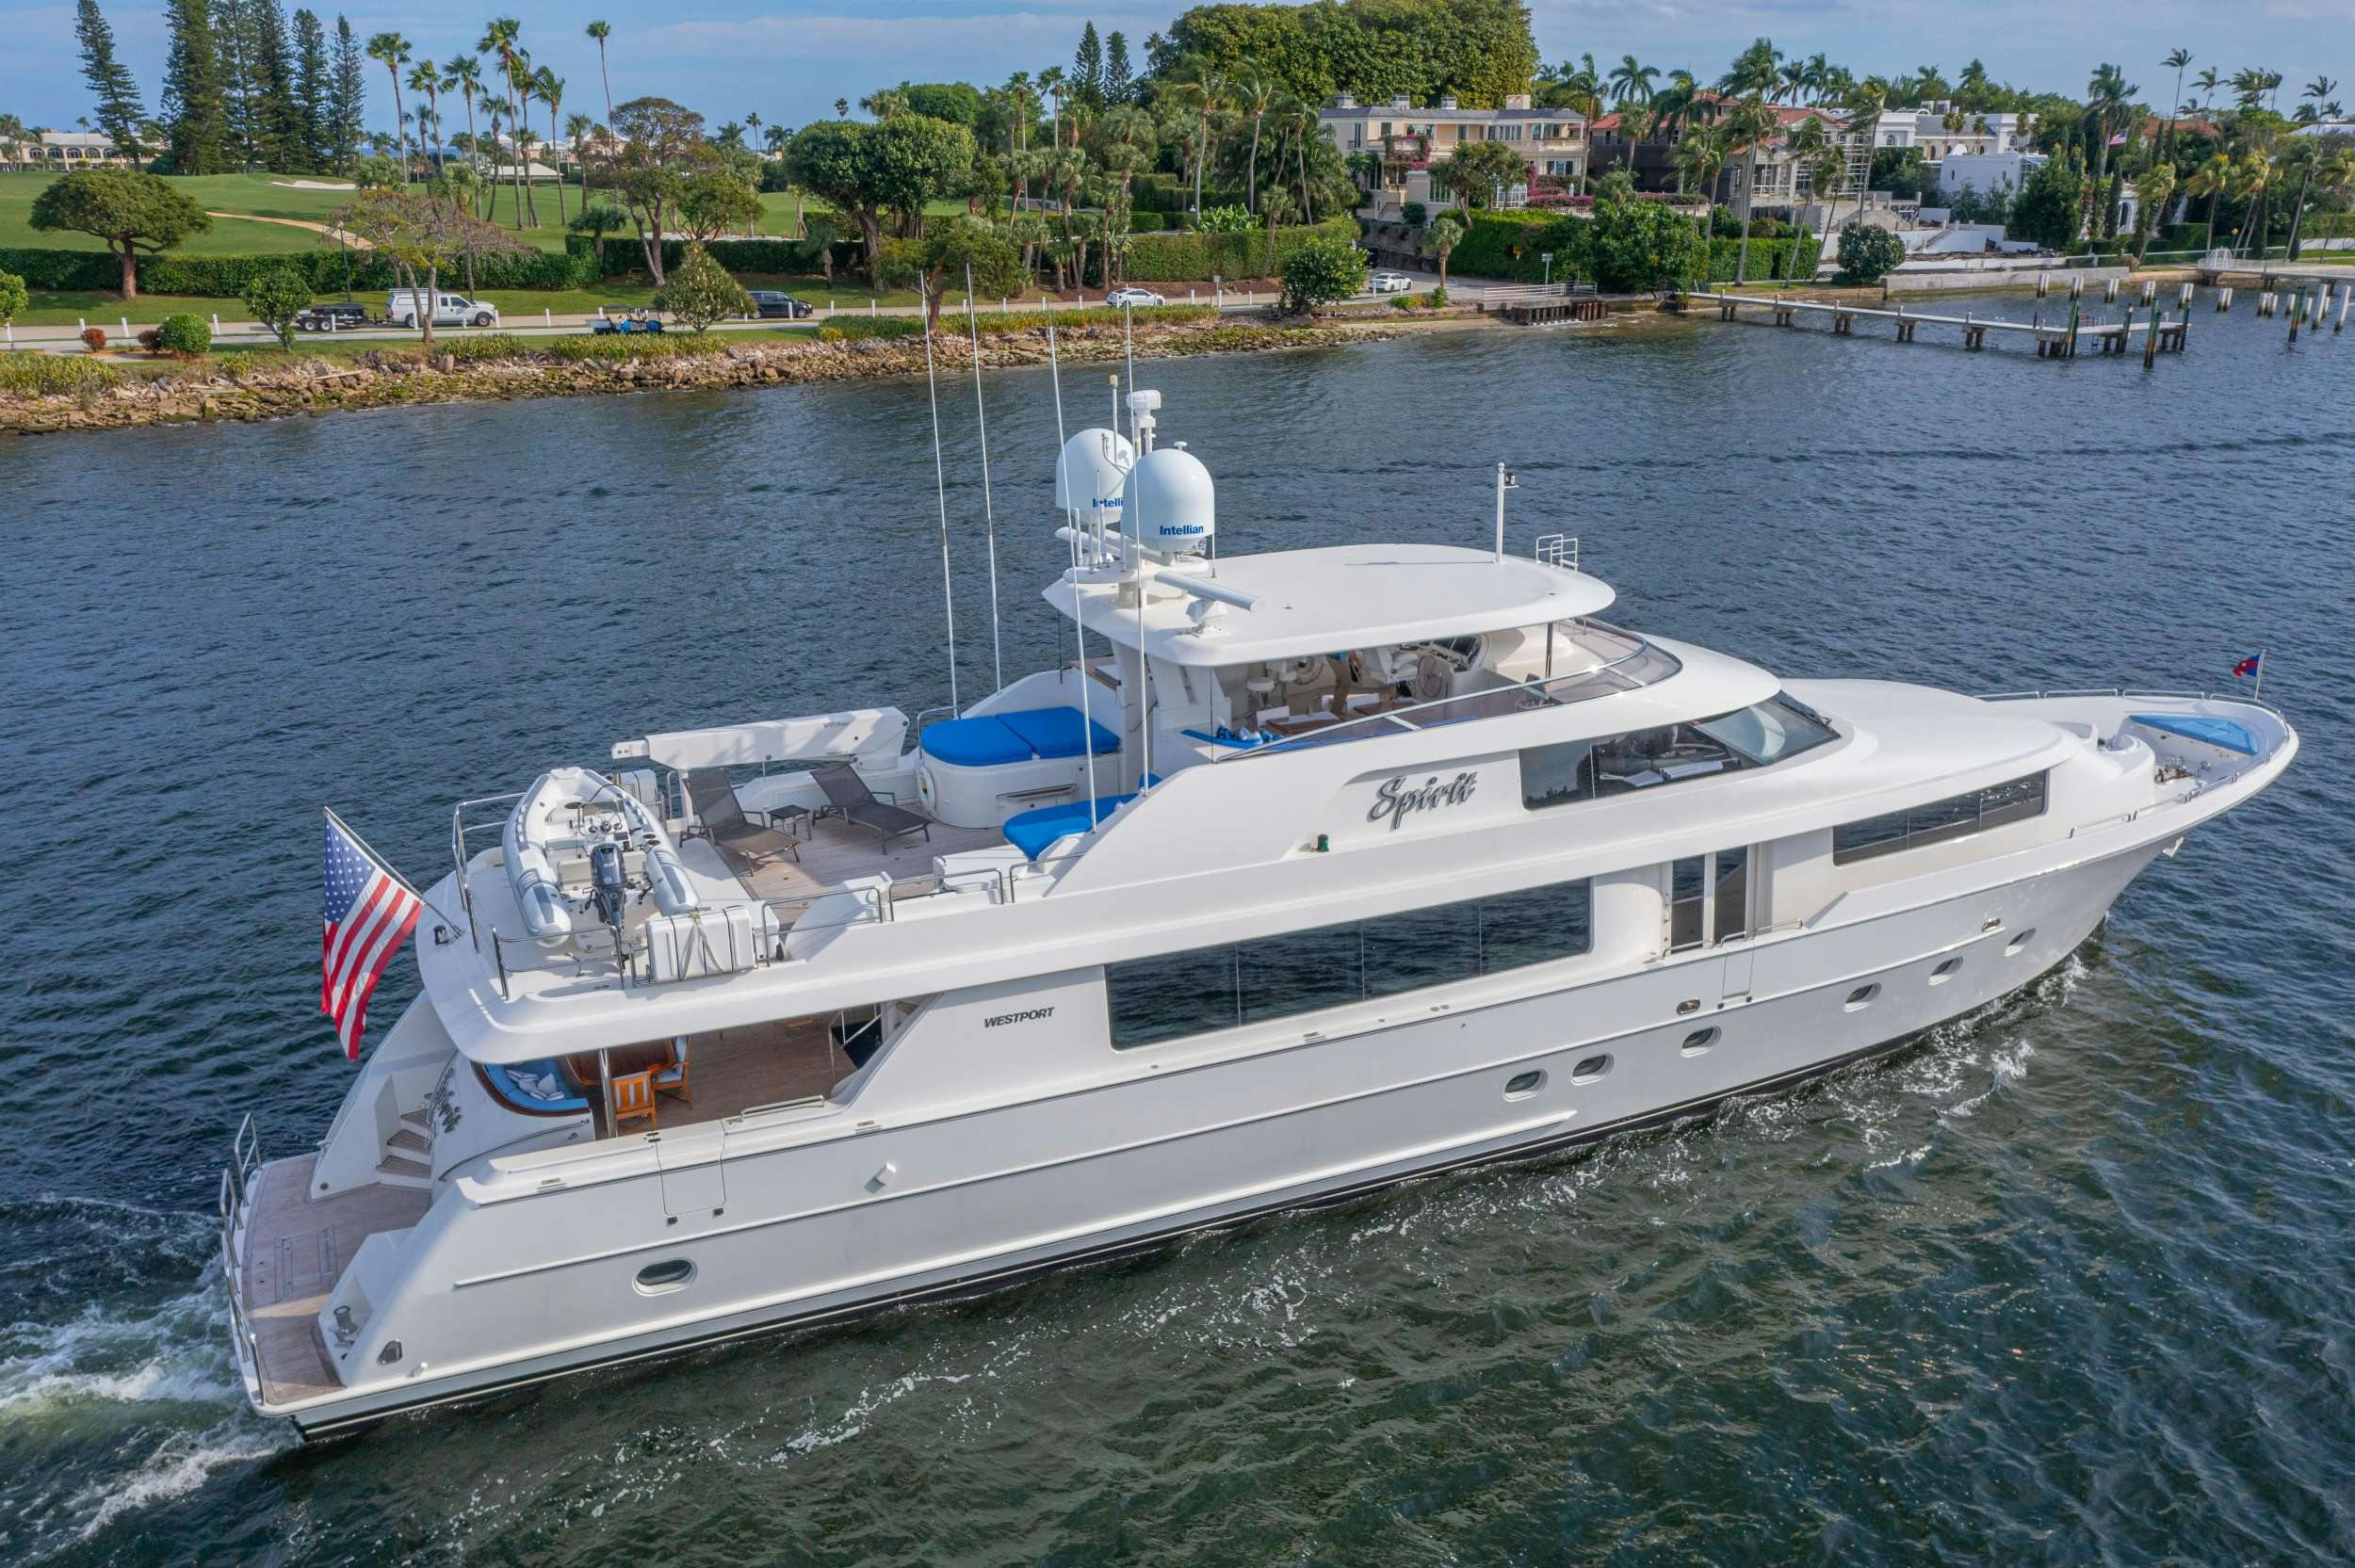 SPIRIT - Yacht Charter USA & Boat hire in Florida & Bahamas 1